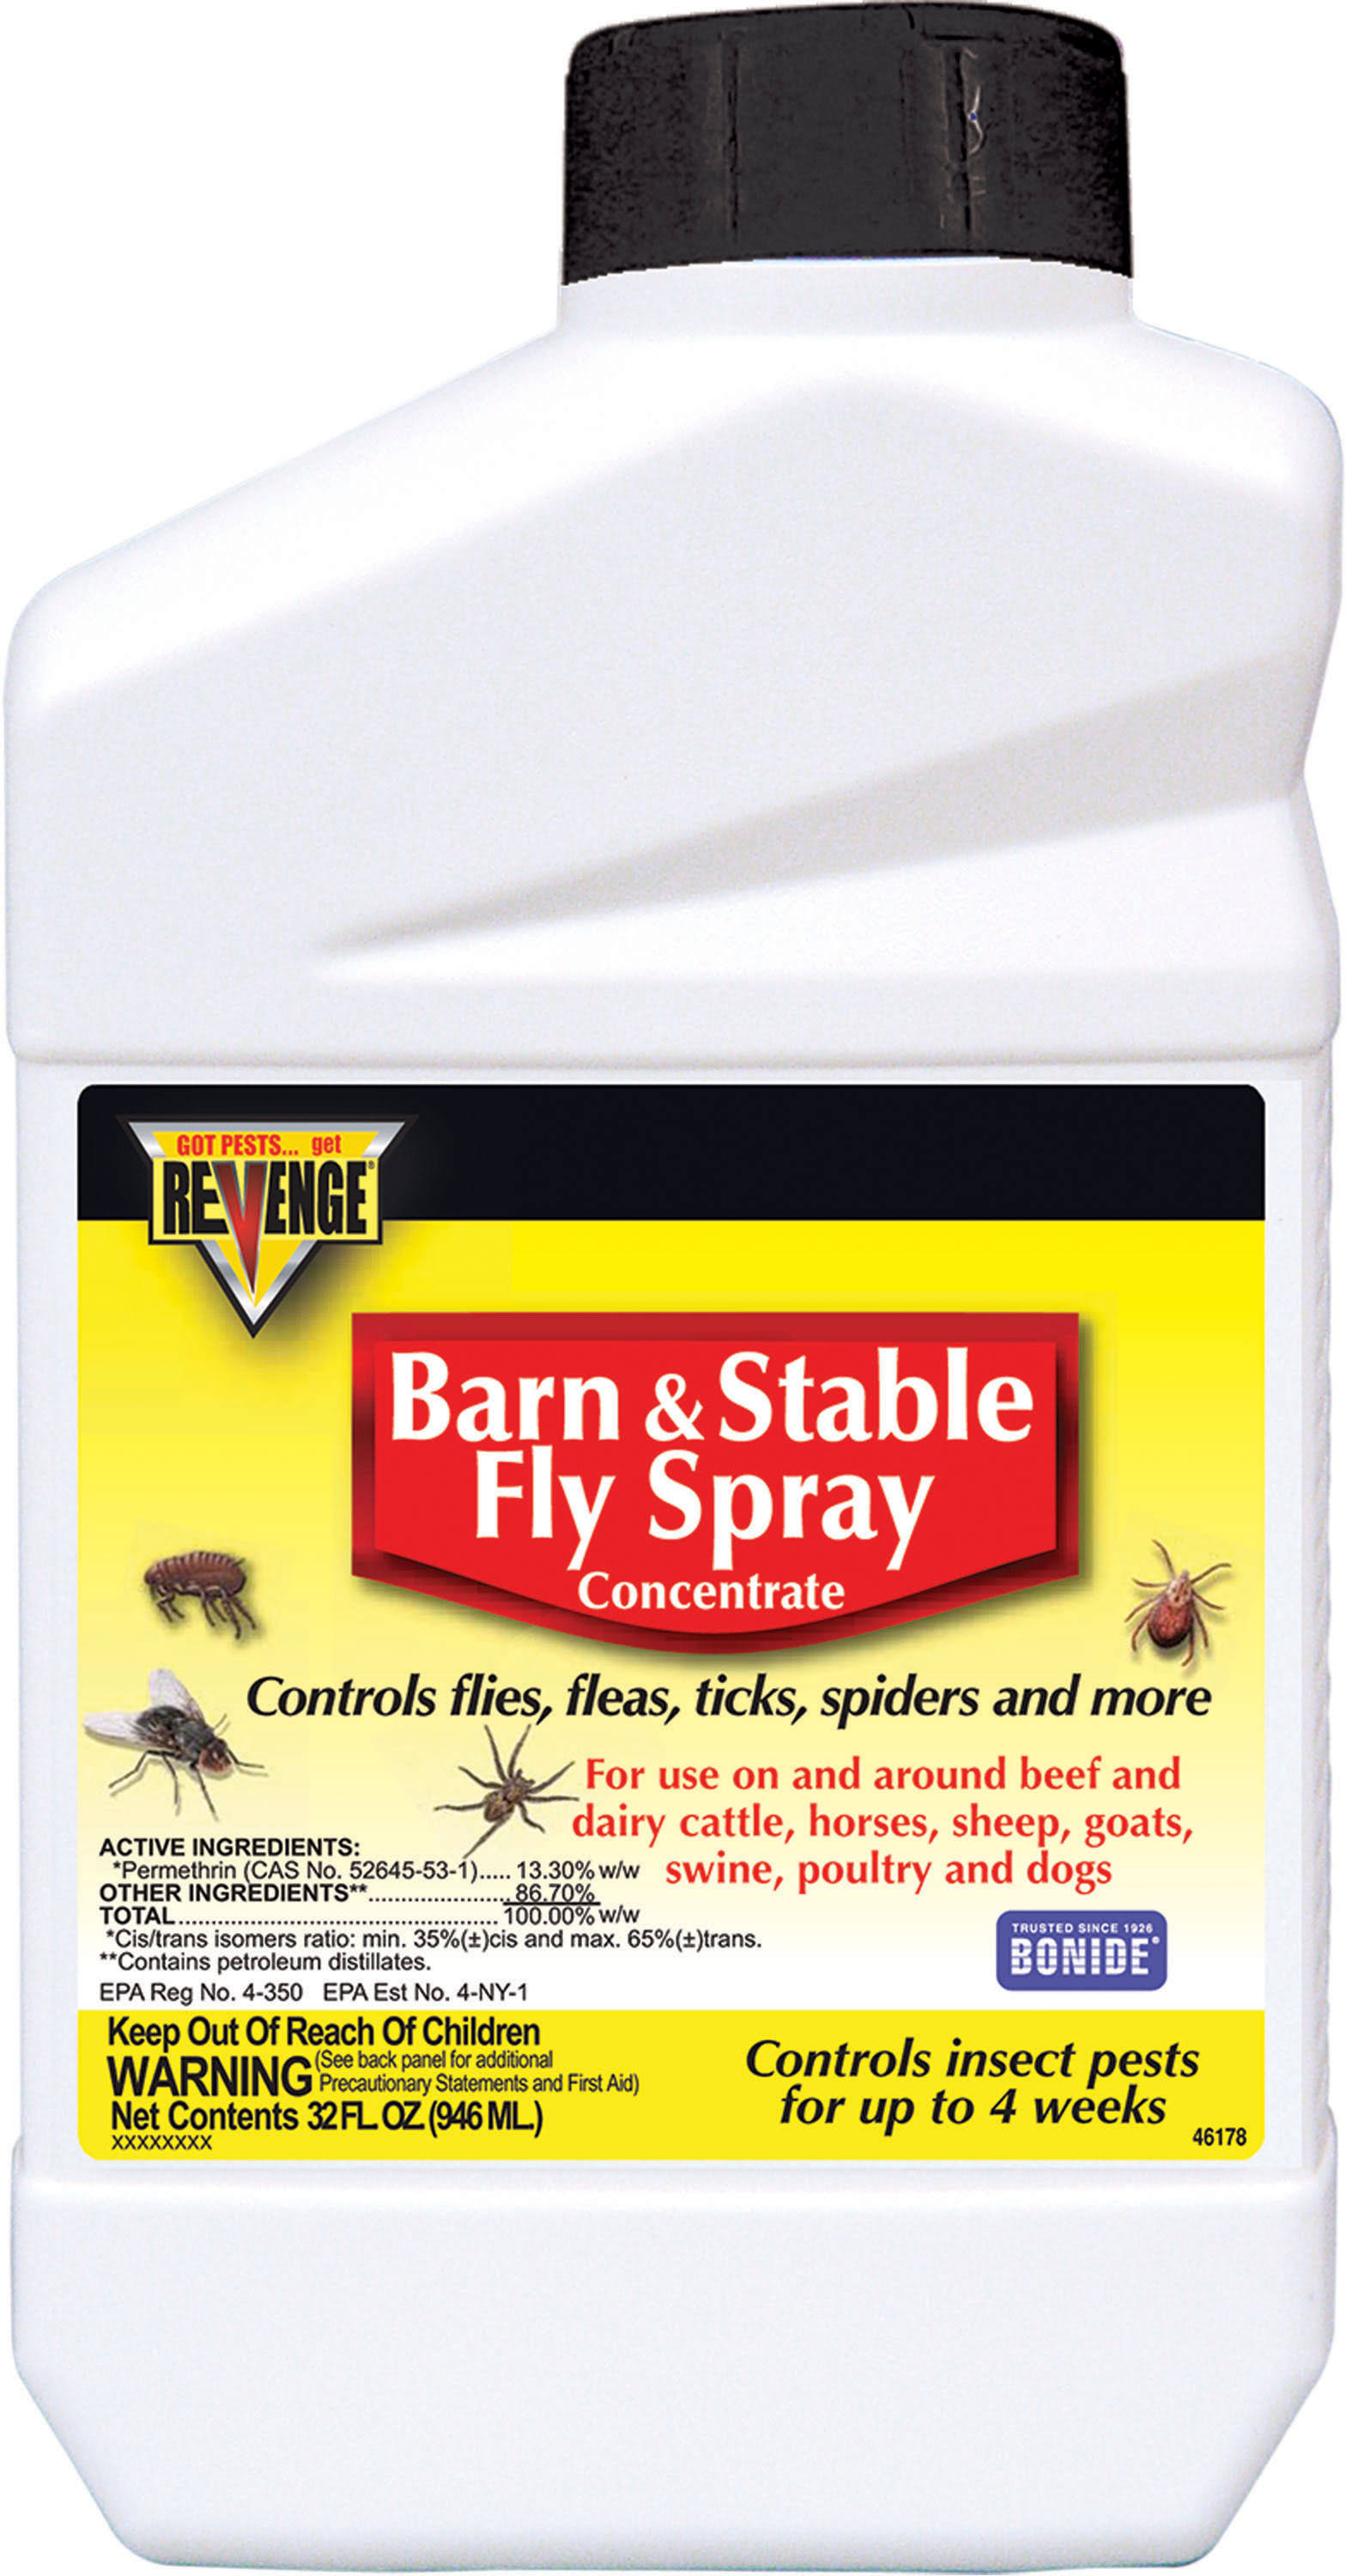 Revenge Barn & Stable Fly Spray Concentrate Bonide Pest Control - 32 Oz